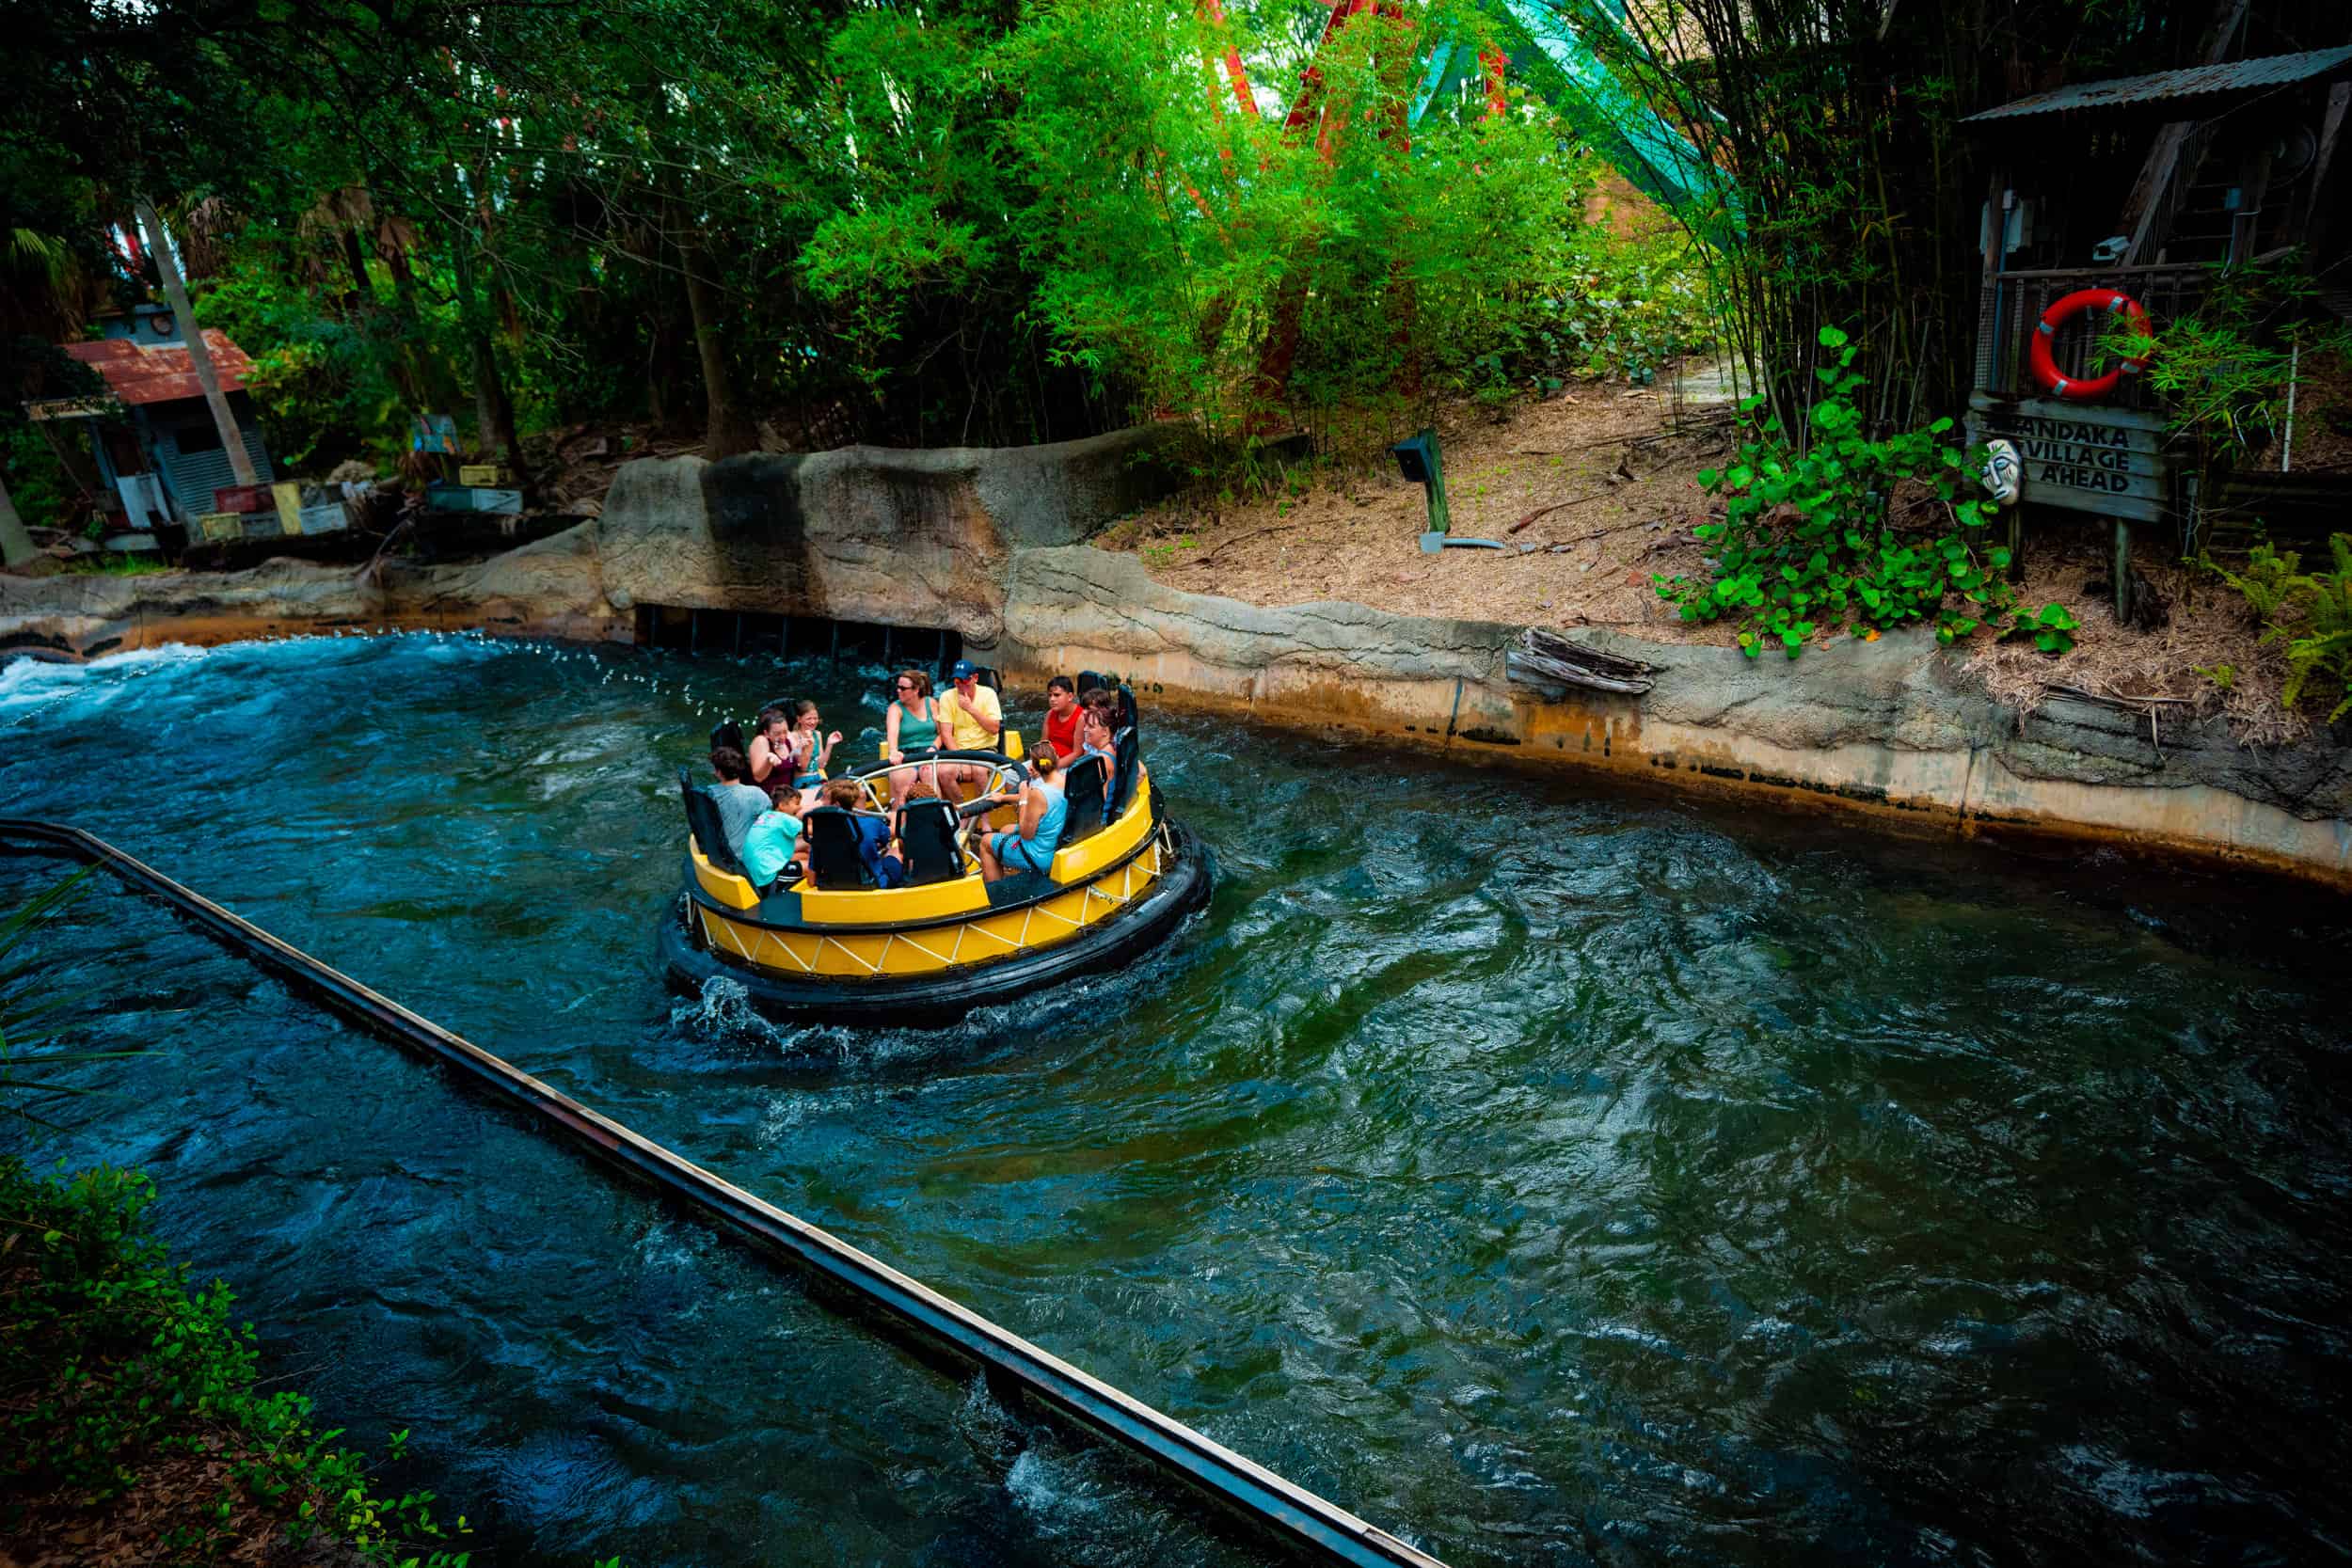 Congo River Rapids at Busch Gardens Tampa Bay